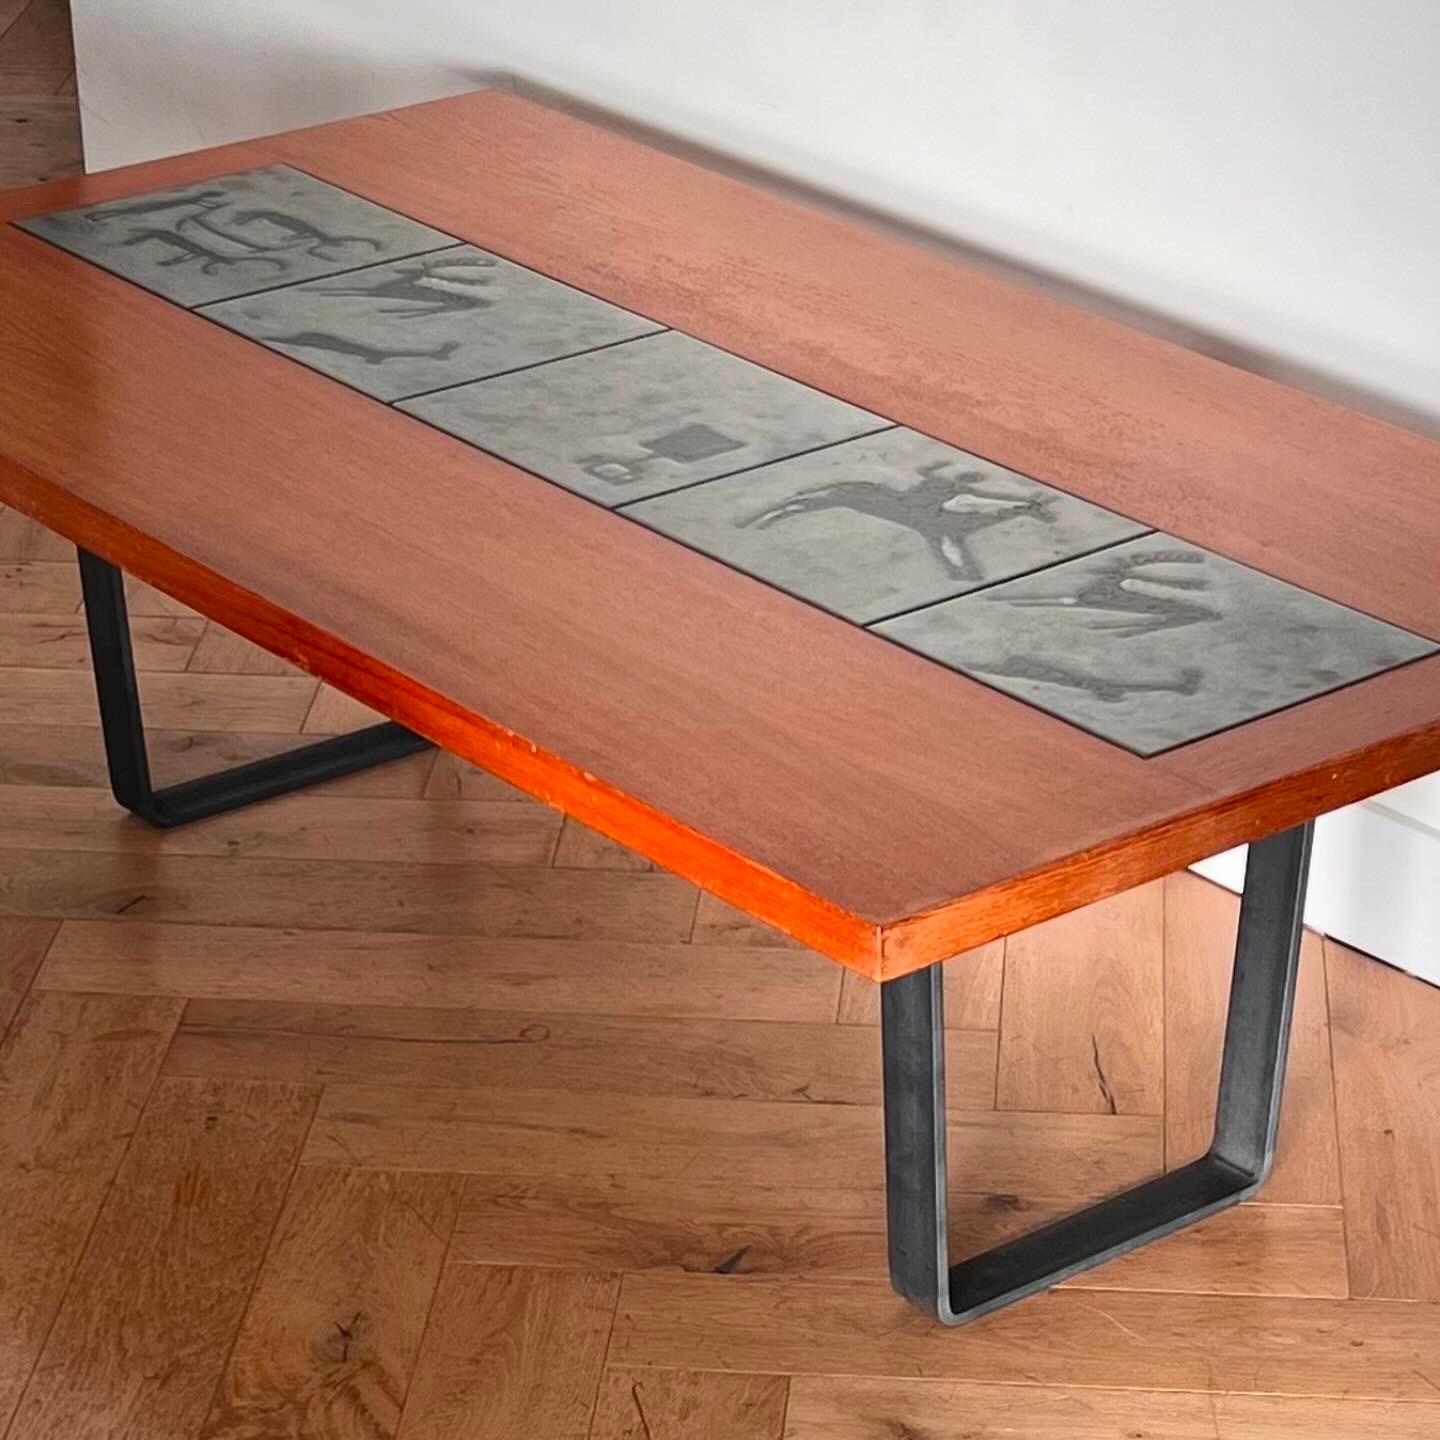 Danish modern teak coffee table with prehistoric tile inlay, 1960s For Sale 2